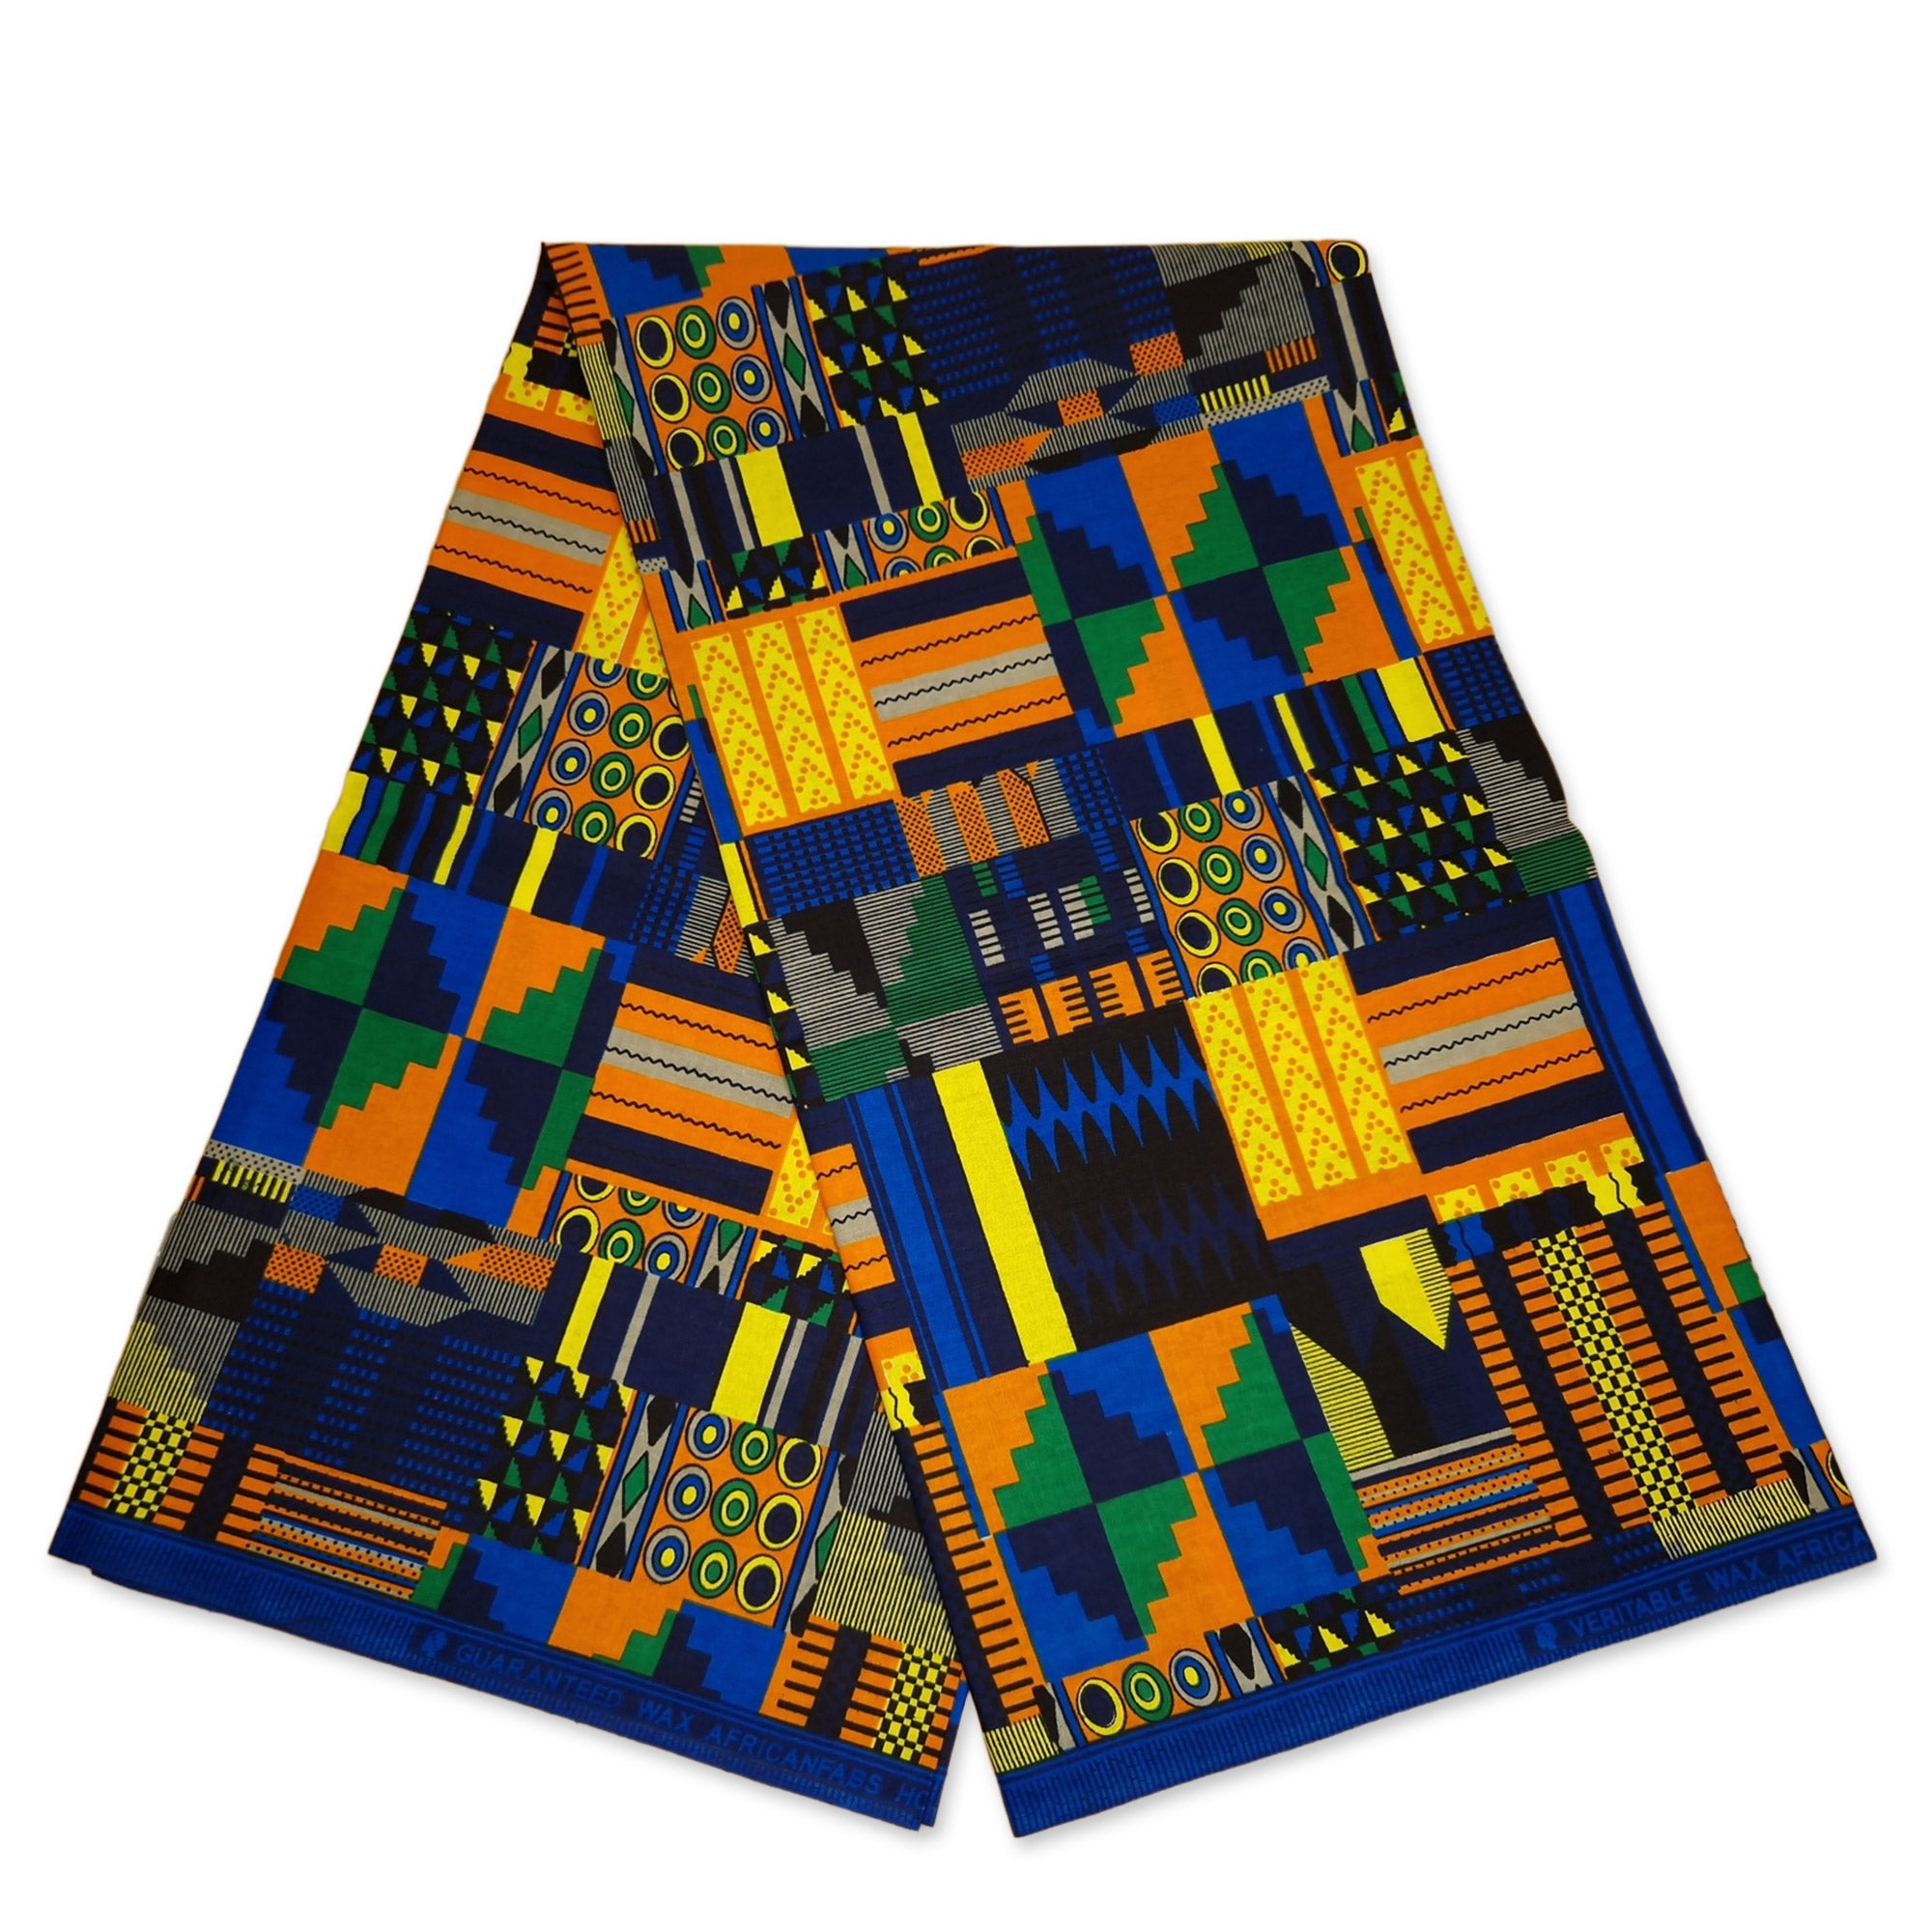 Tissu kente Bleu / Orange Kinte pagne imprimé / tissu Ghana AF-4027 - 100% coton